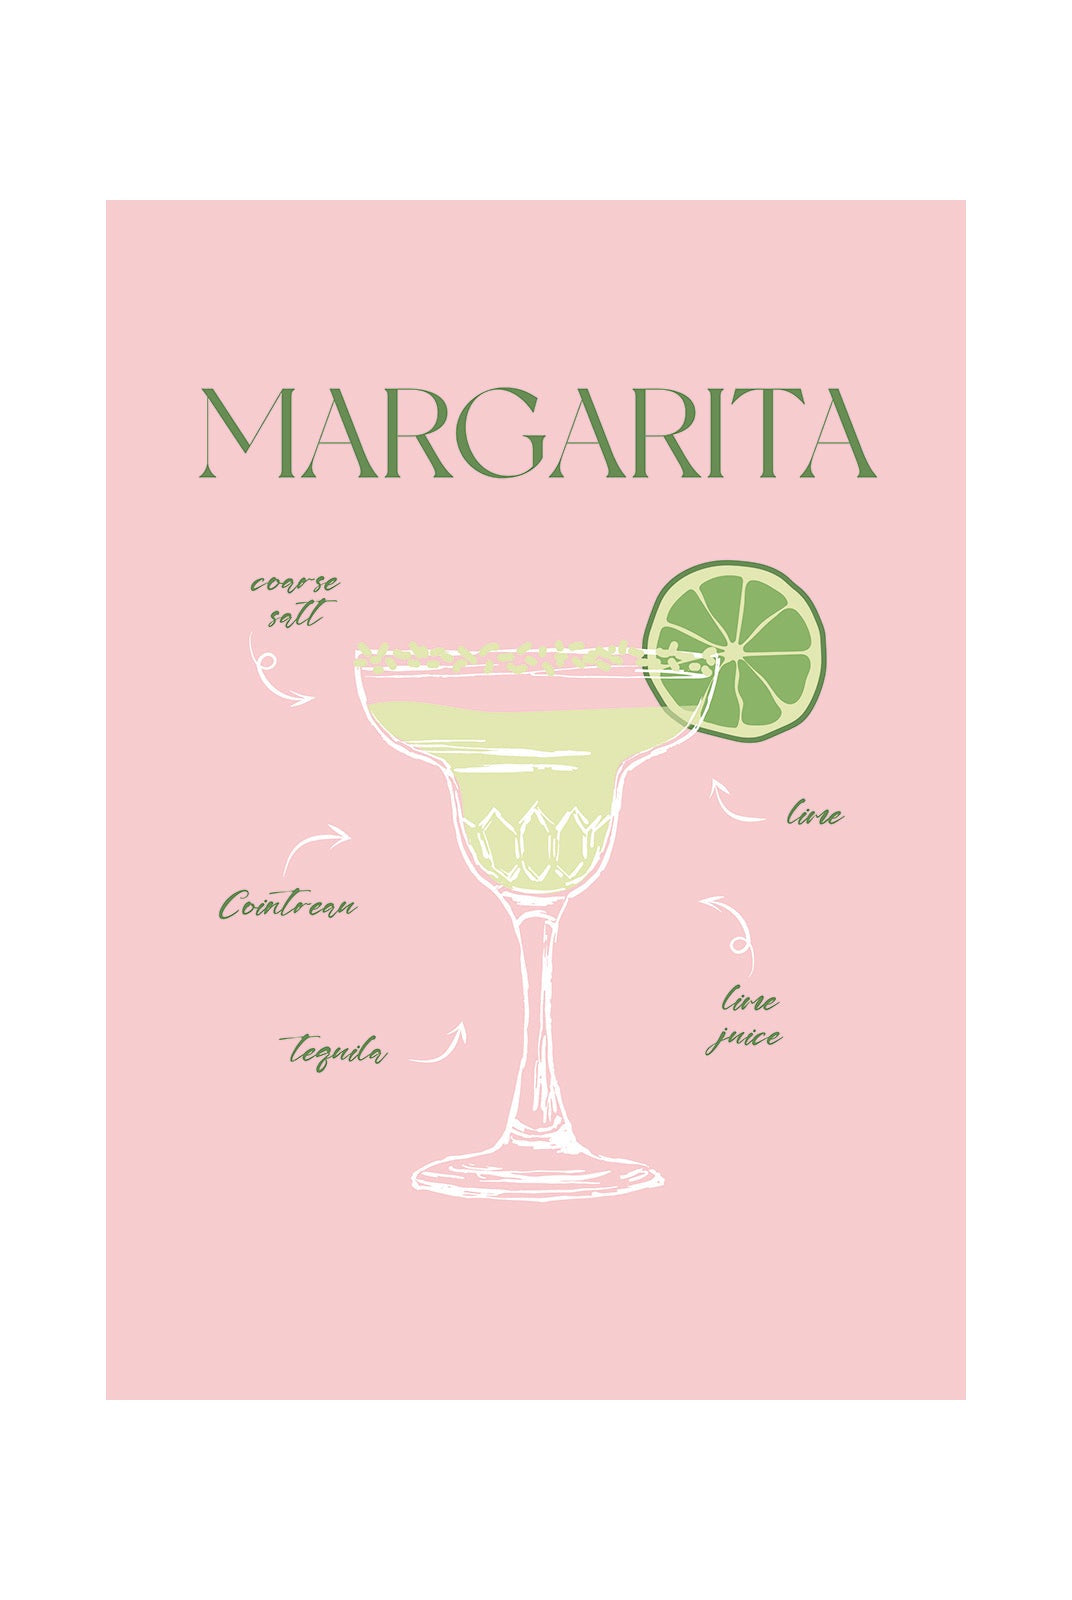 Margarita Mix